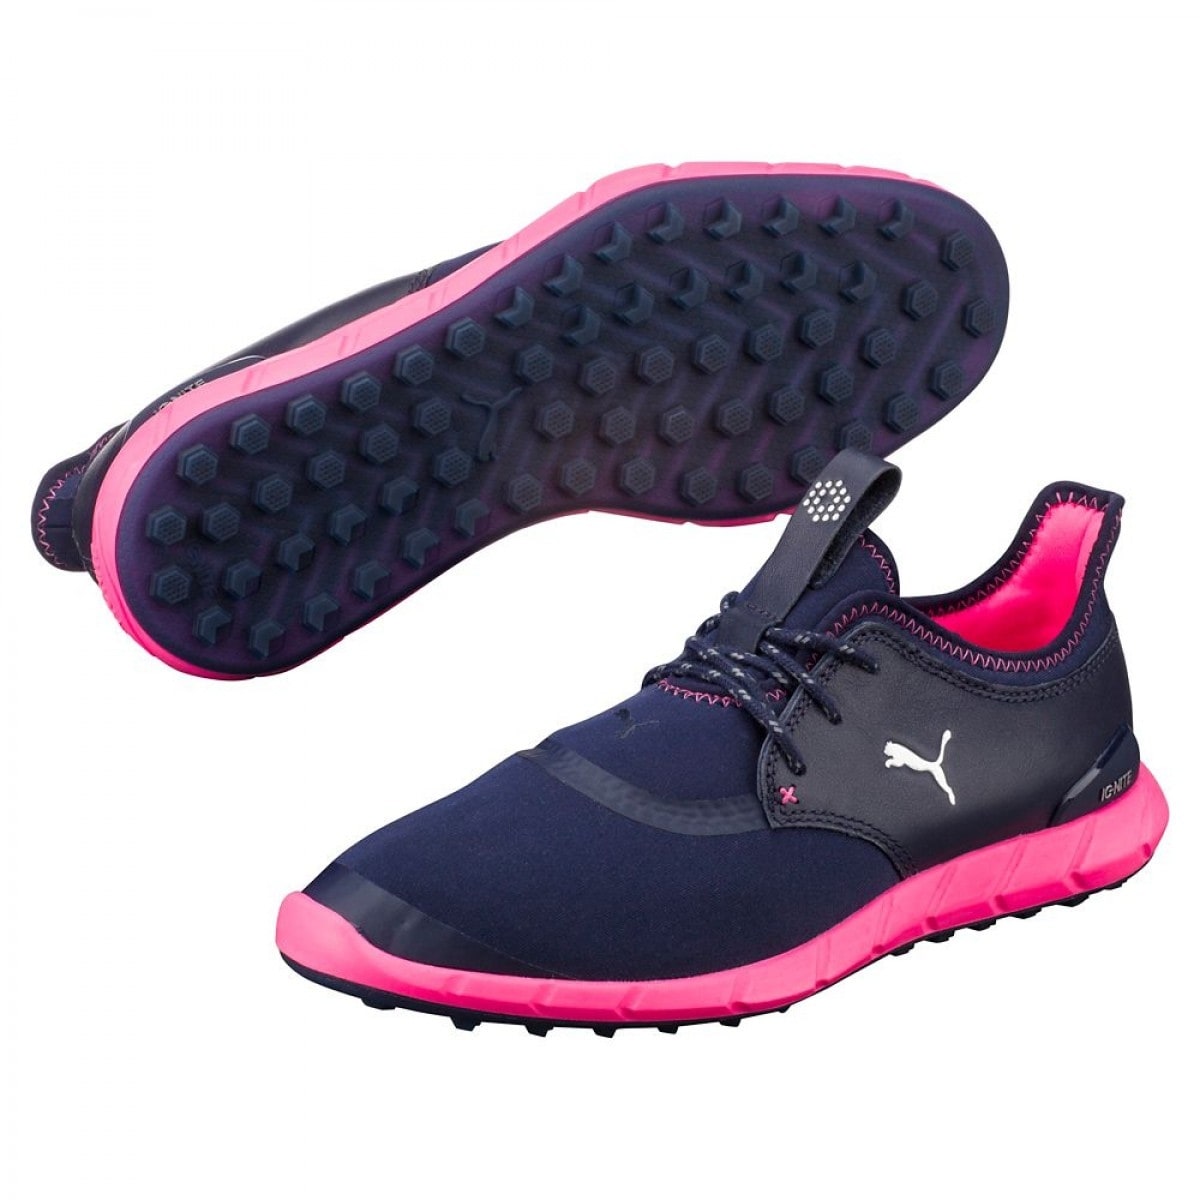 puma women's golf shoes